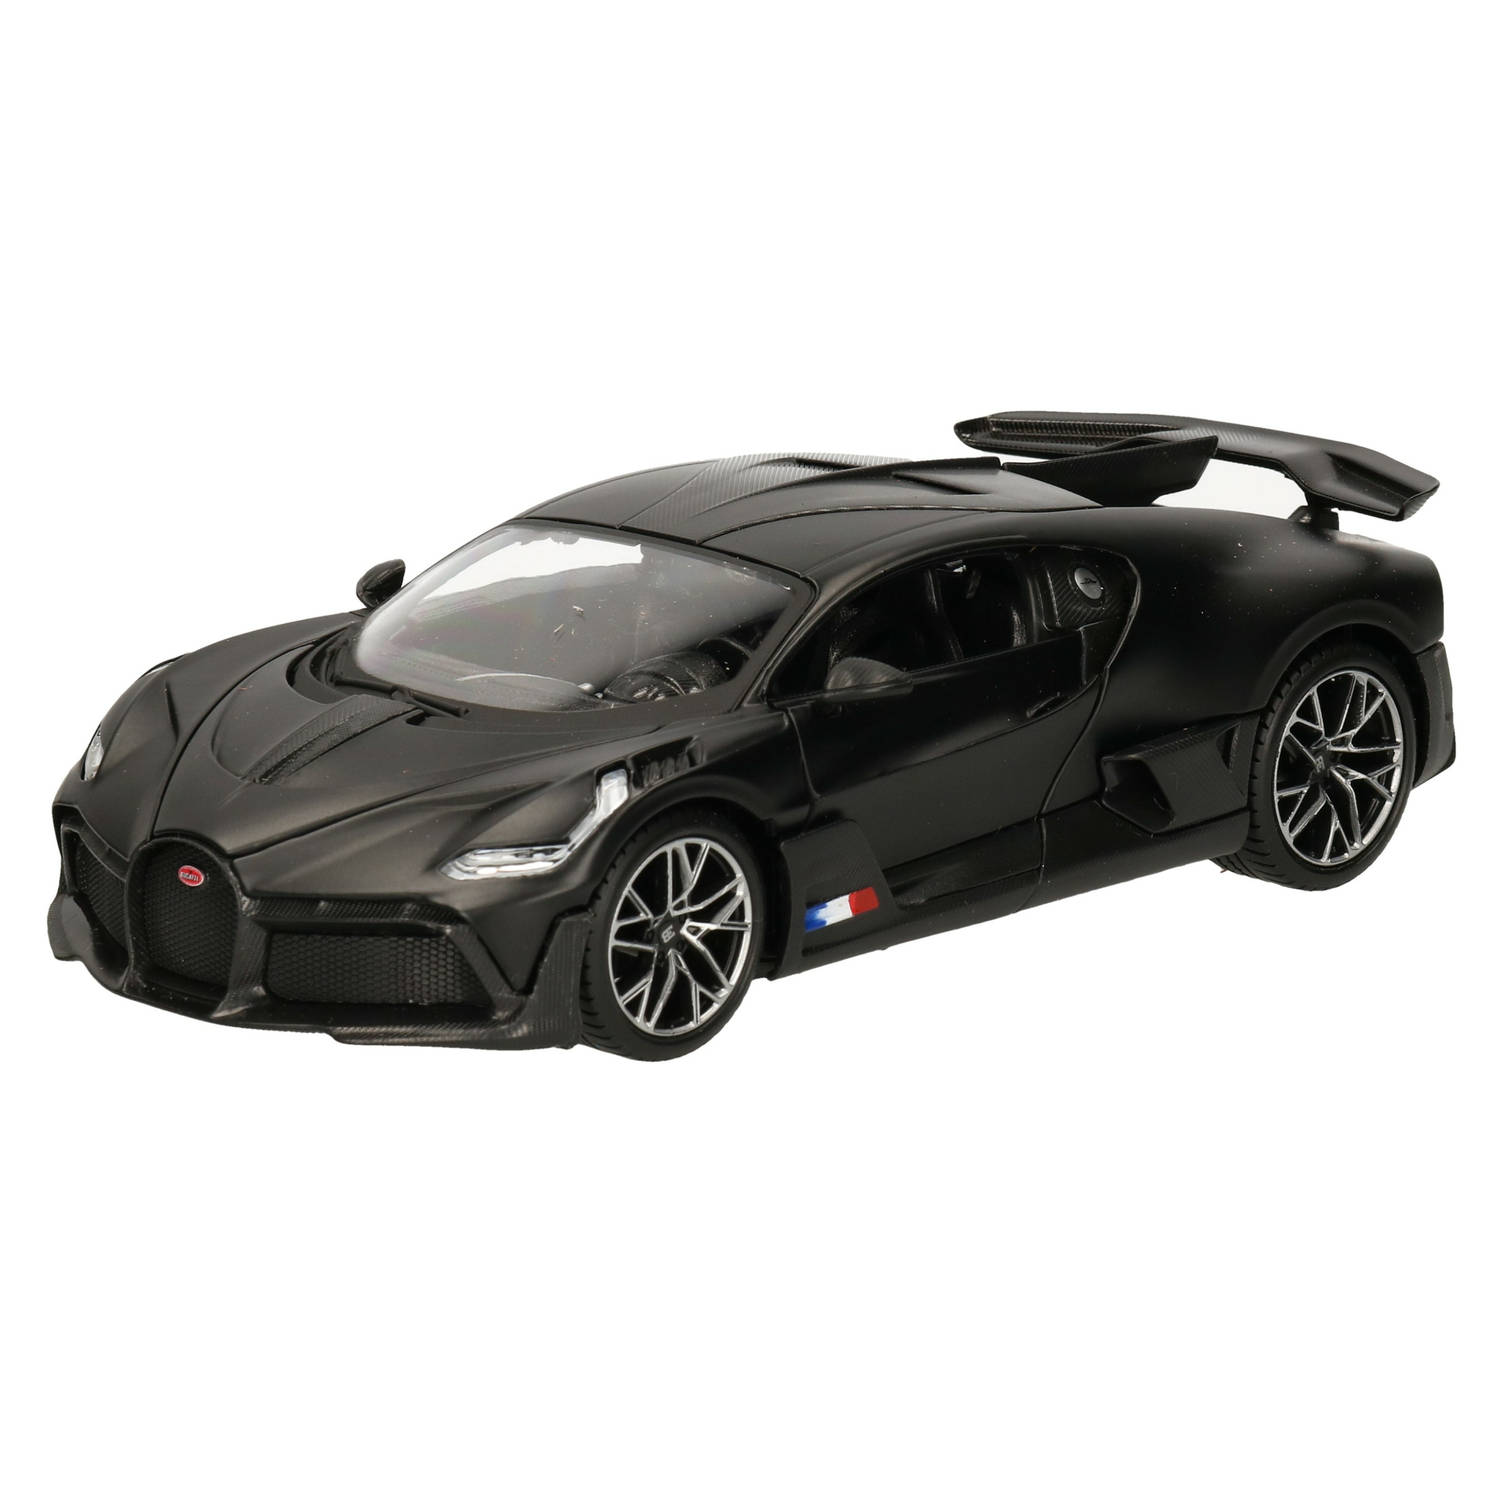 Modelauto/speelgoedauto Bugatti Divo Special Edition schaal 1:24/19 x 8 x 5 cm - Speelgoed auto&apos;s